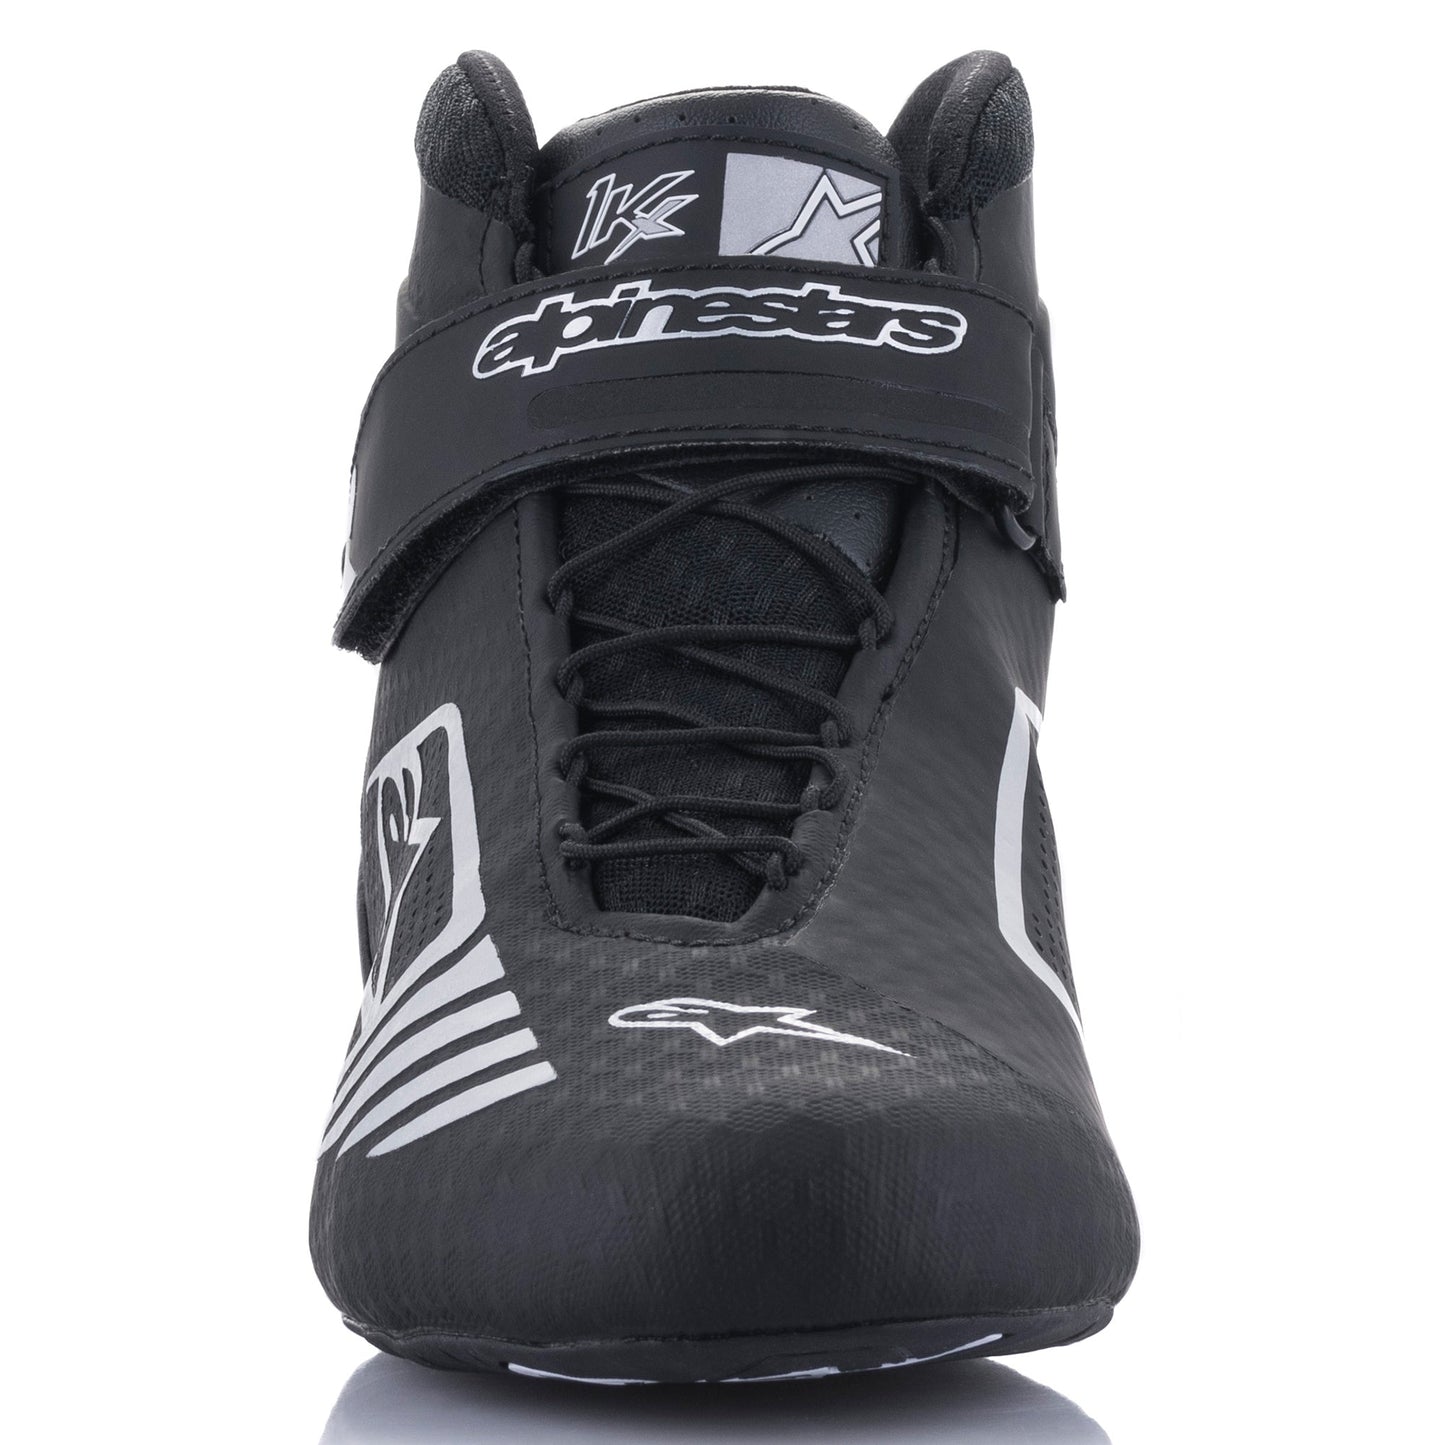 Alpinestars 2022 Tech-1 KX Shoes